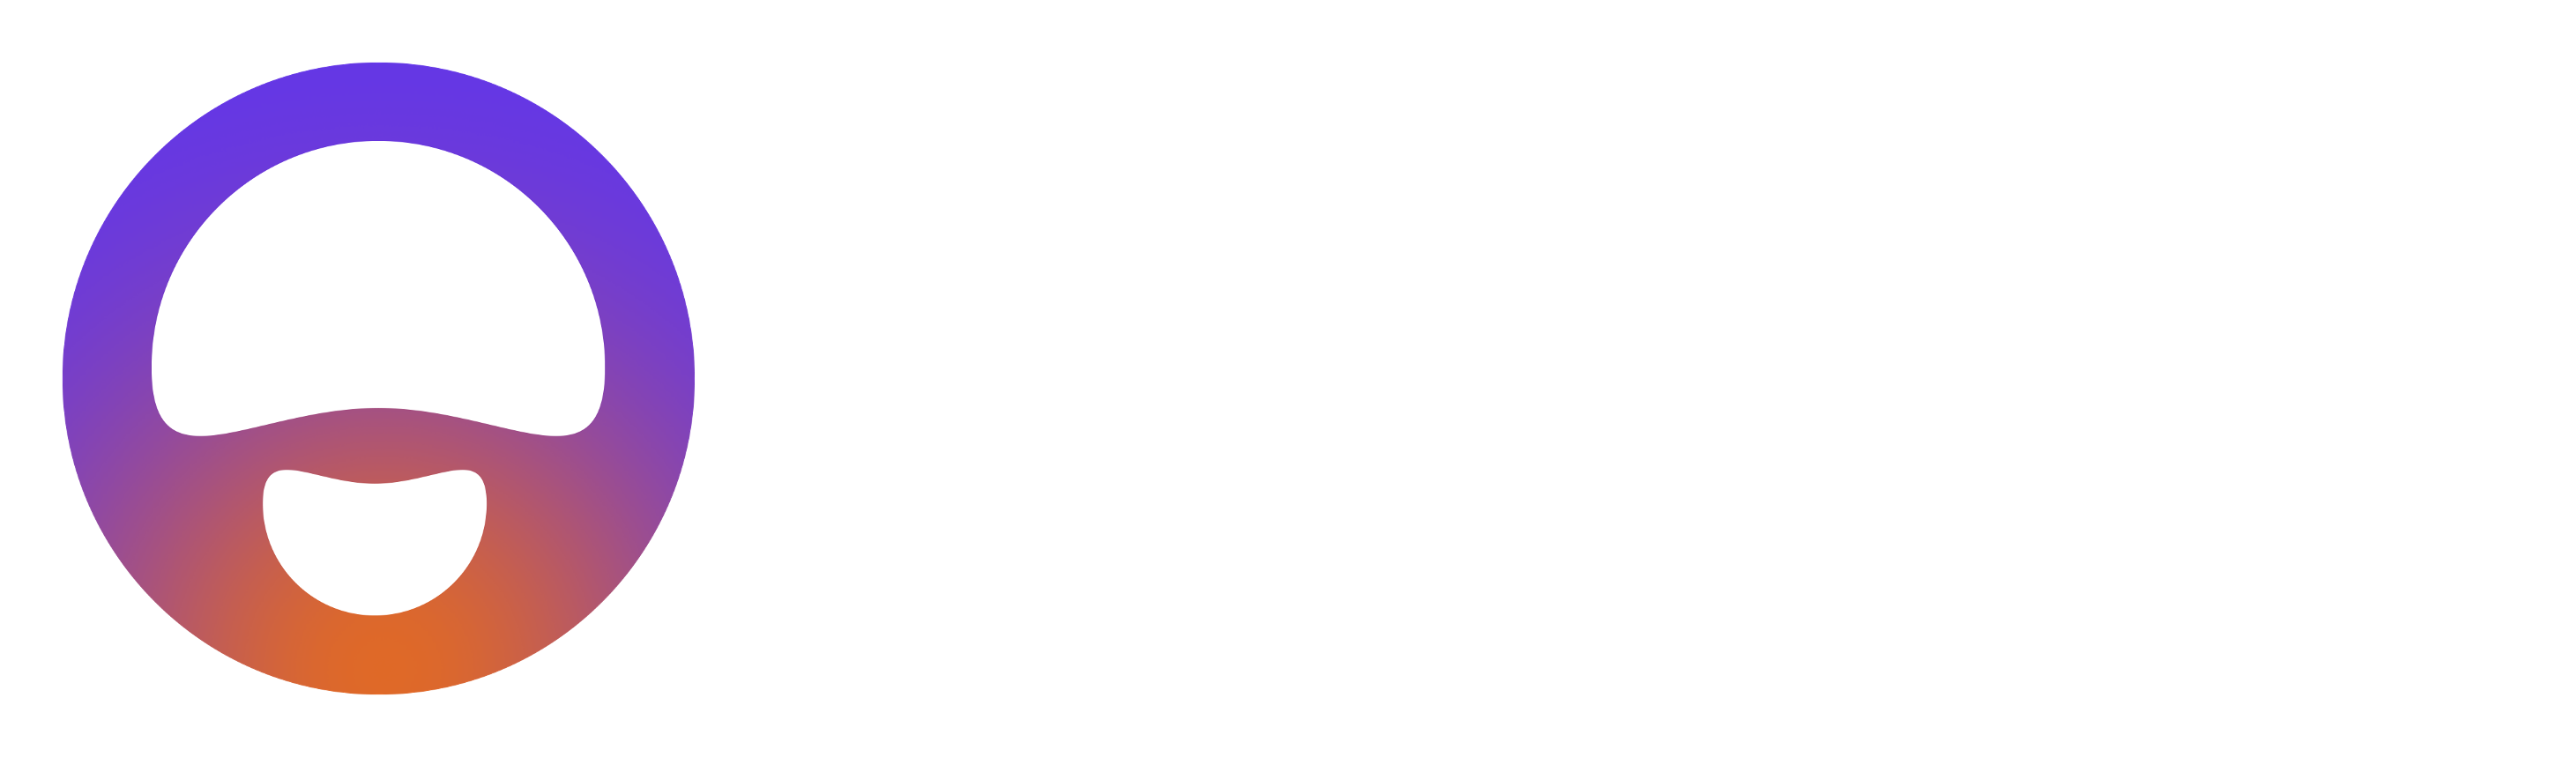 Fungies logo white transperent